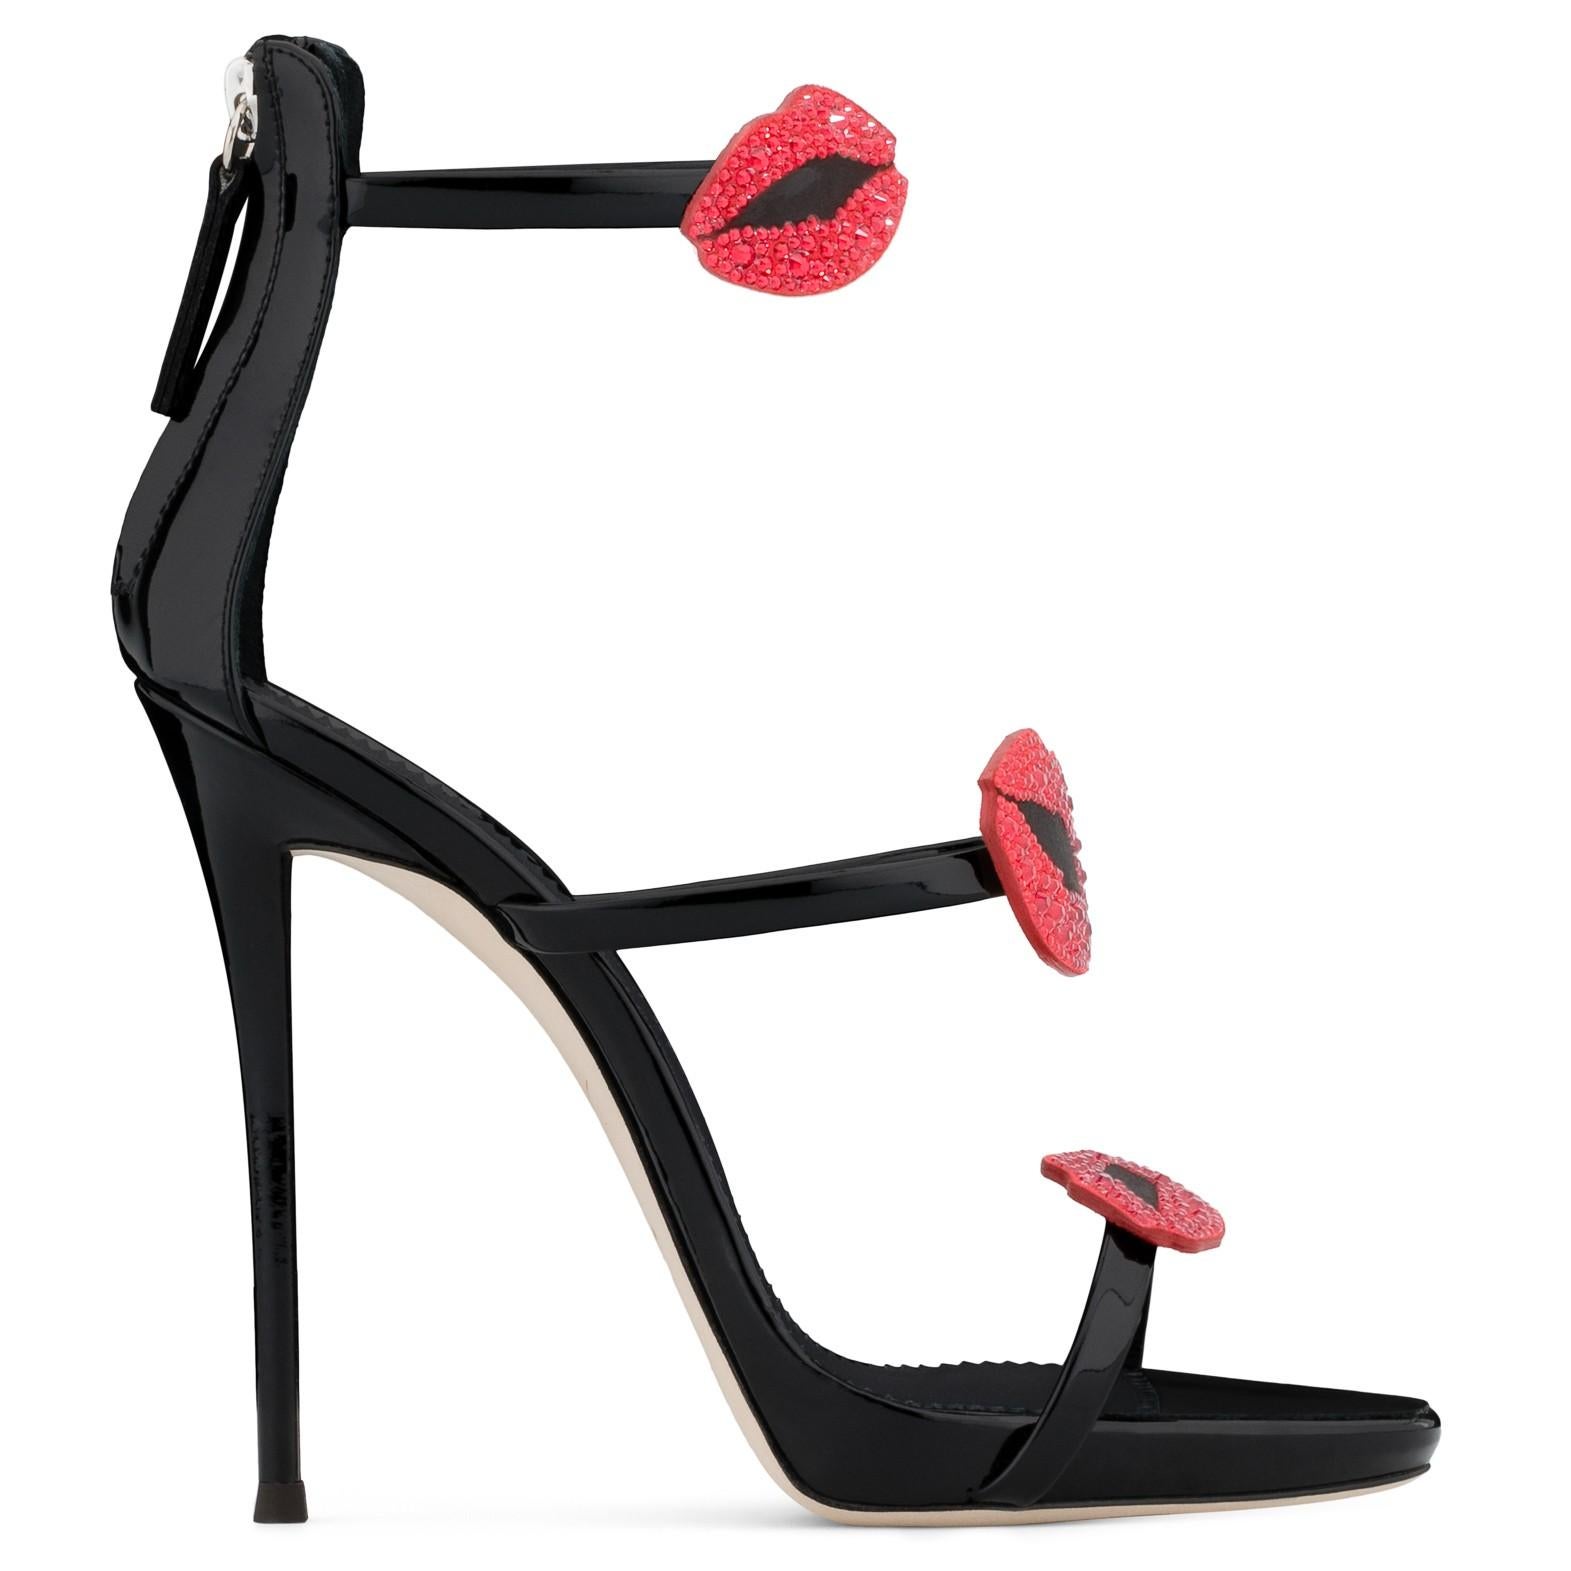 Women's Giuseppe Zanotti NEW Black Patent Red Crystal Evening Sandals Heels in Box